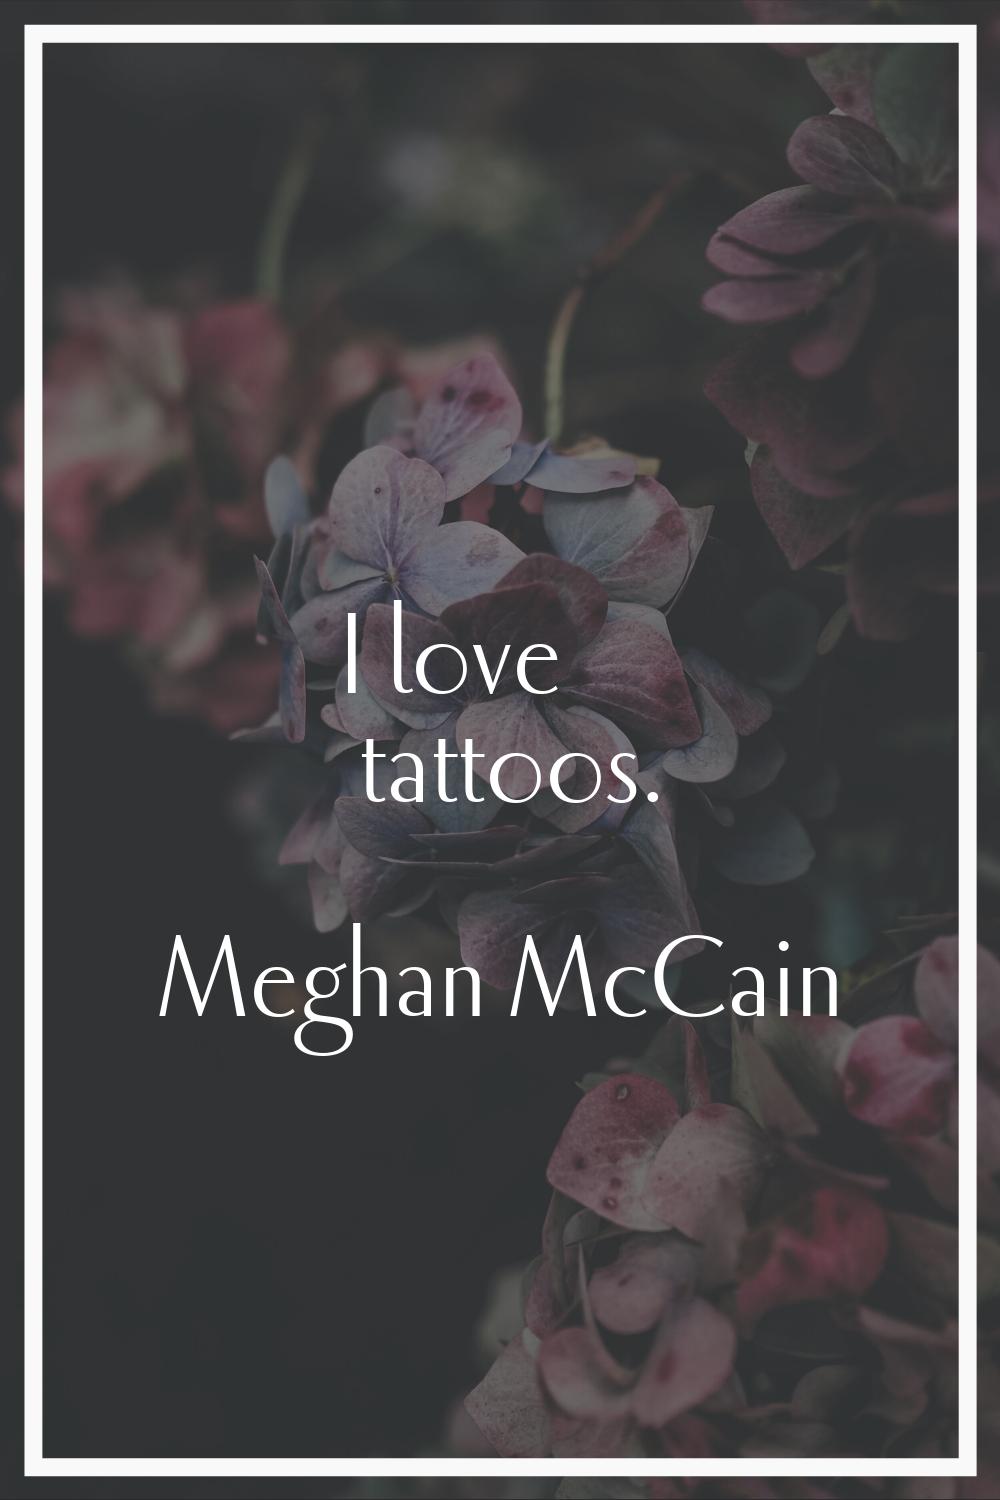 I love tattoos.